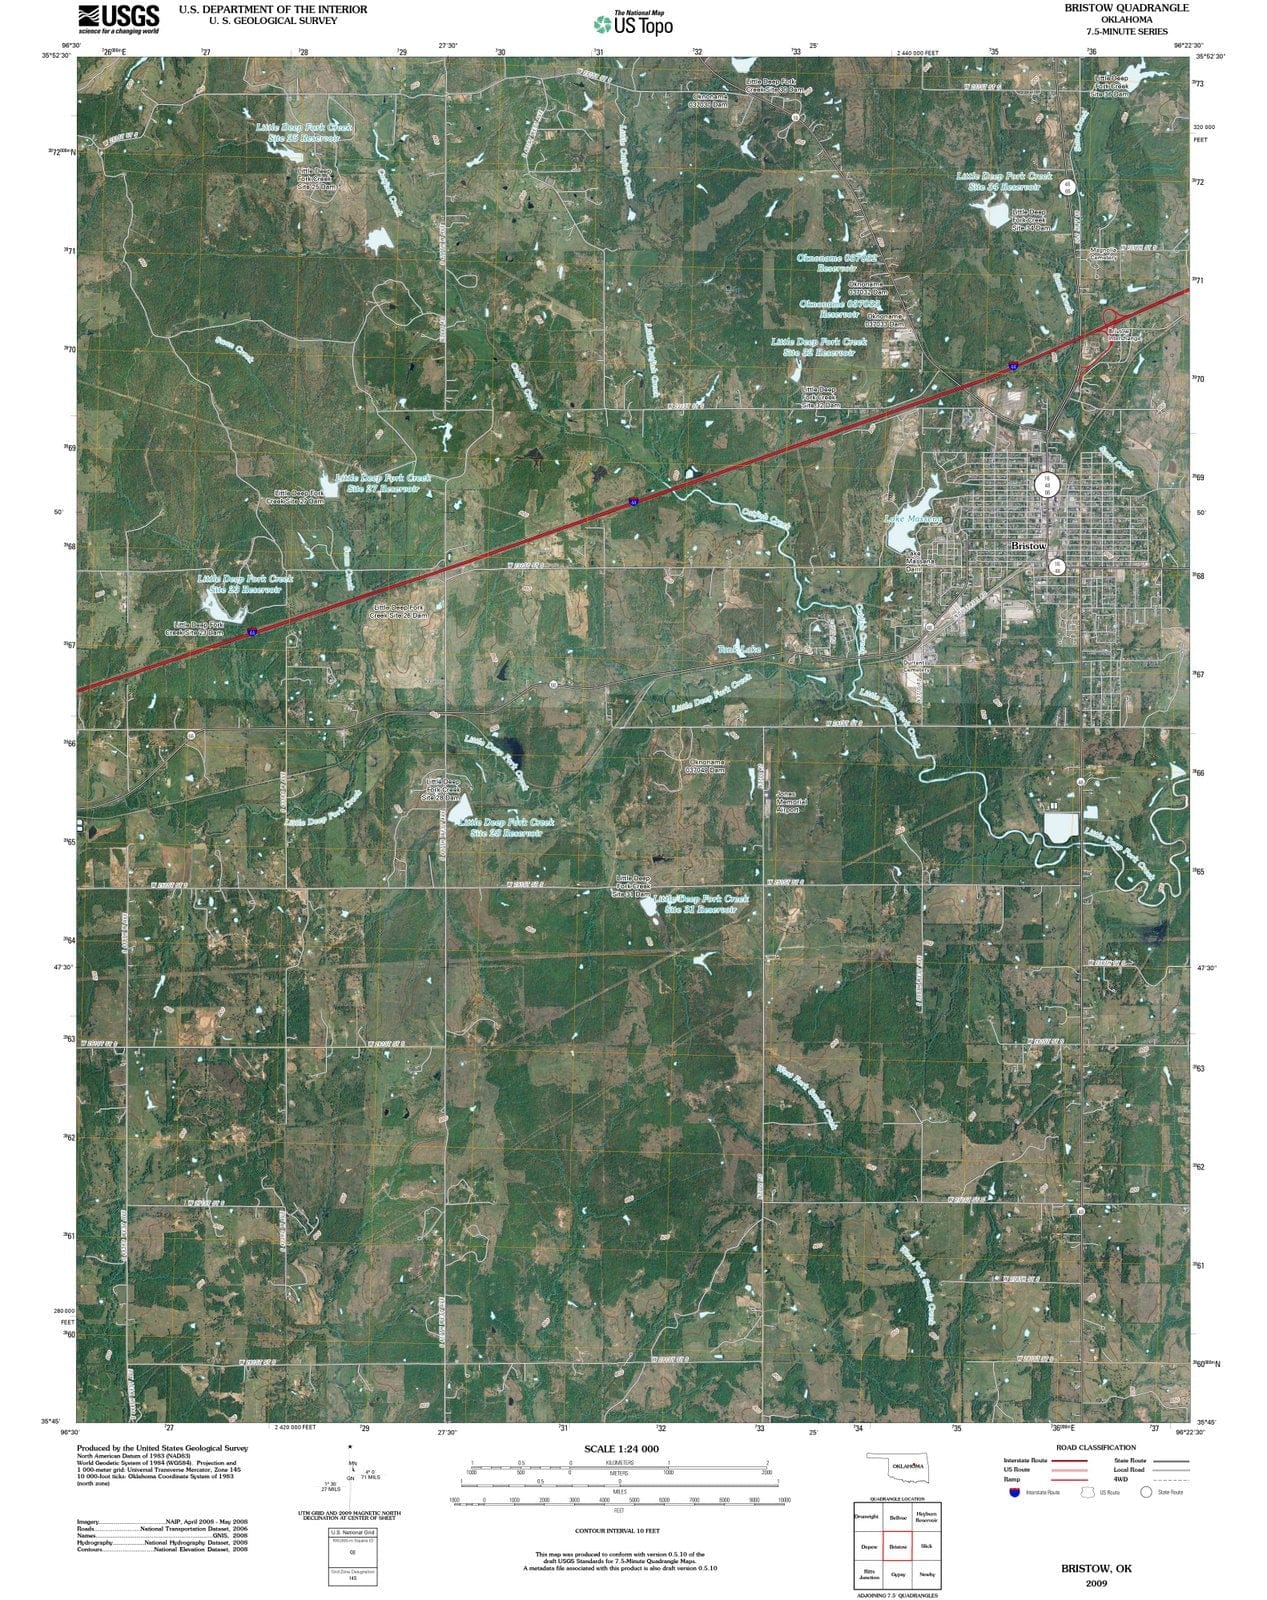 2009 Bristow, OK - Oklahoma - USGS Topographic Map